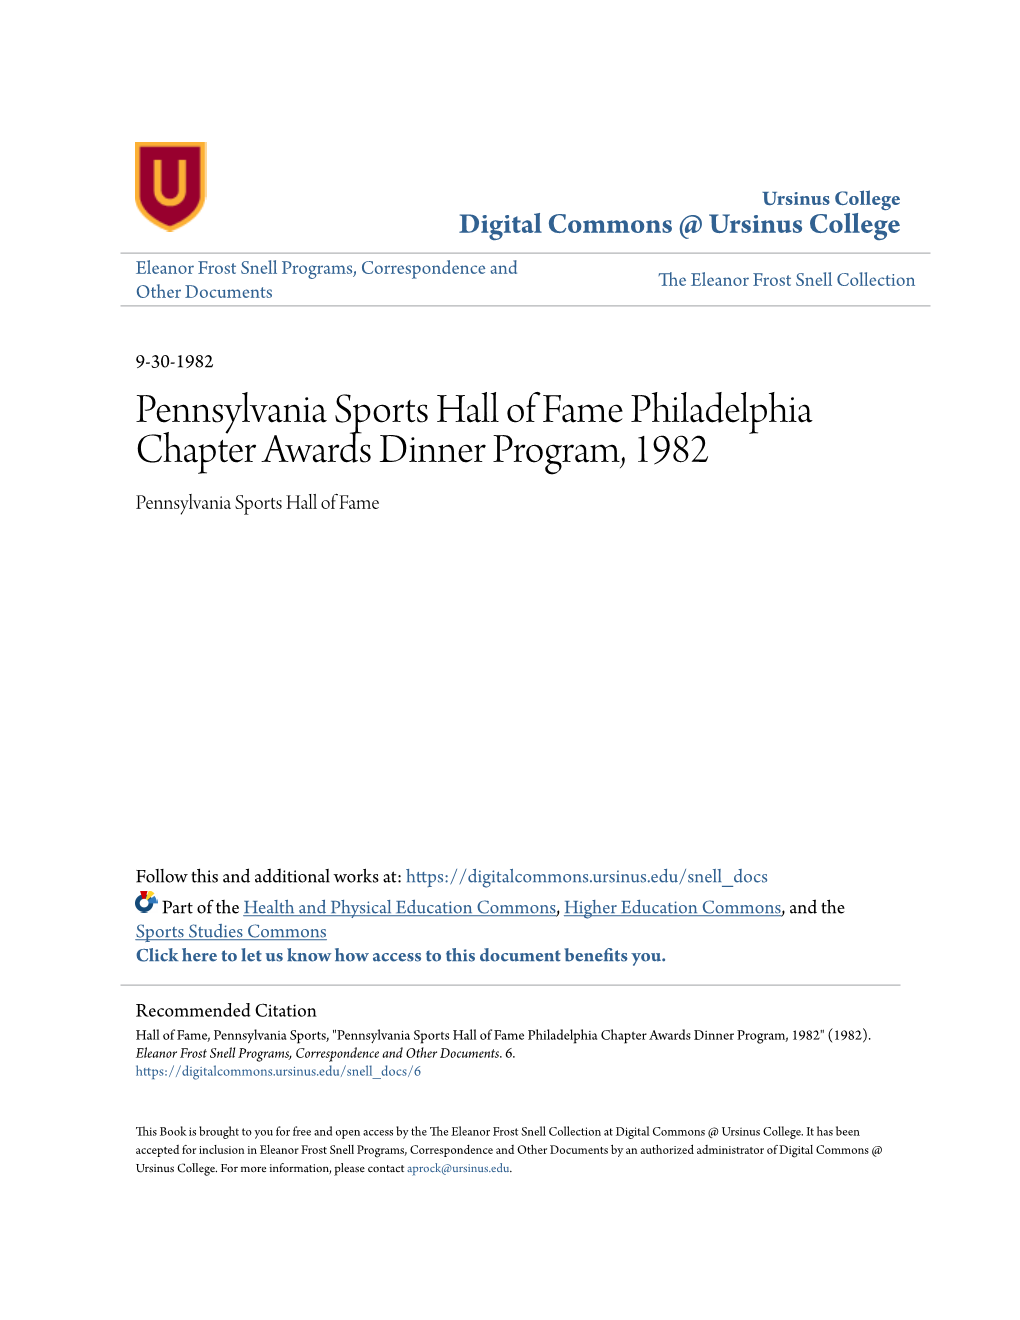 Pennsylvania Sports Hall of Fame Philadelphia Chapter Awards Dinner Program, 1982 Pennsylvania Sports Hall of Fame